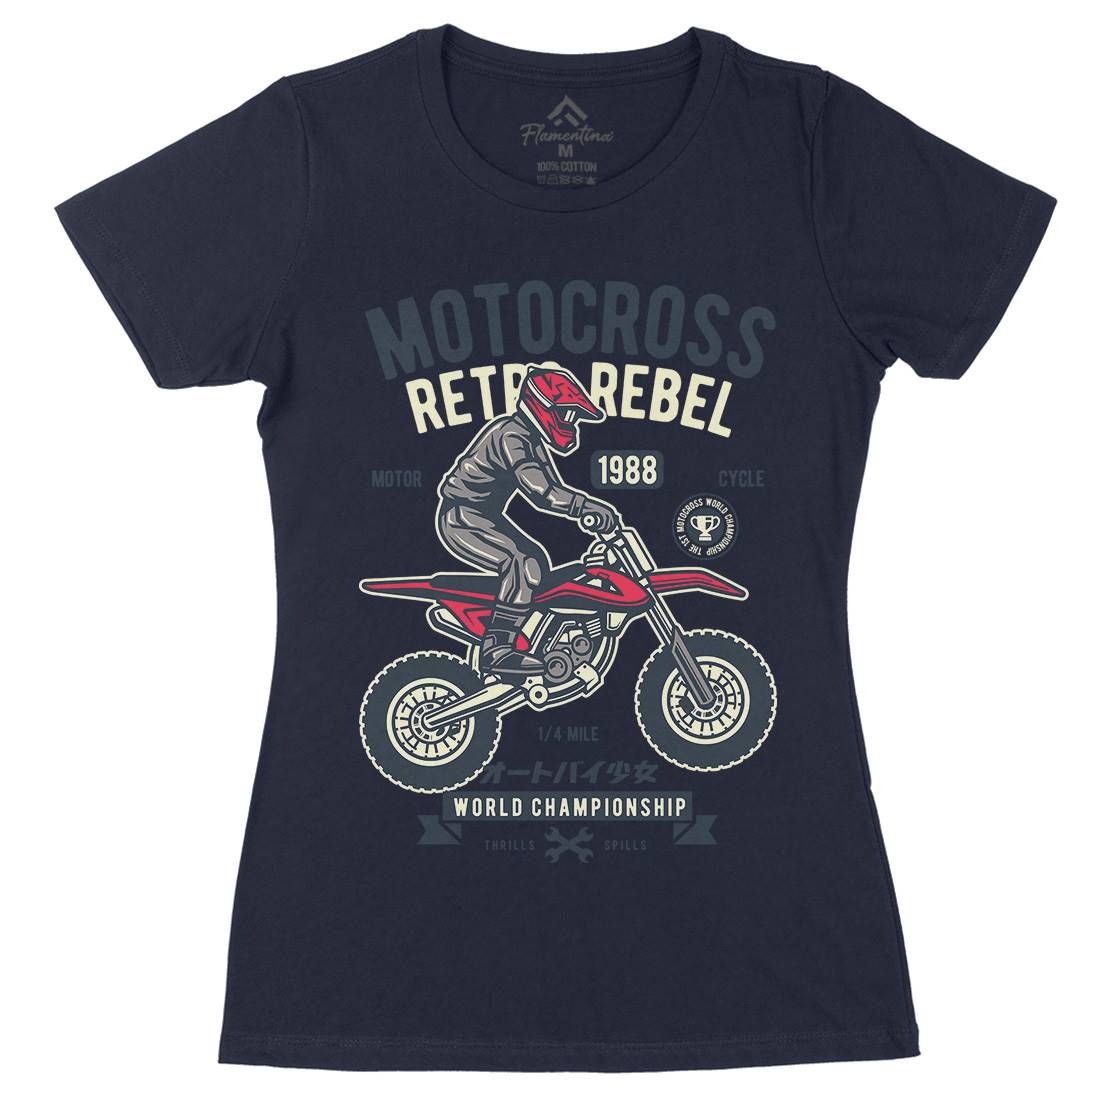 Motocross Retro Rebel Womens Organic Crew Neck T-Shirt Motorcycles D553